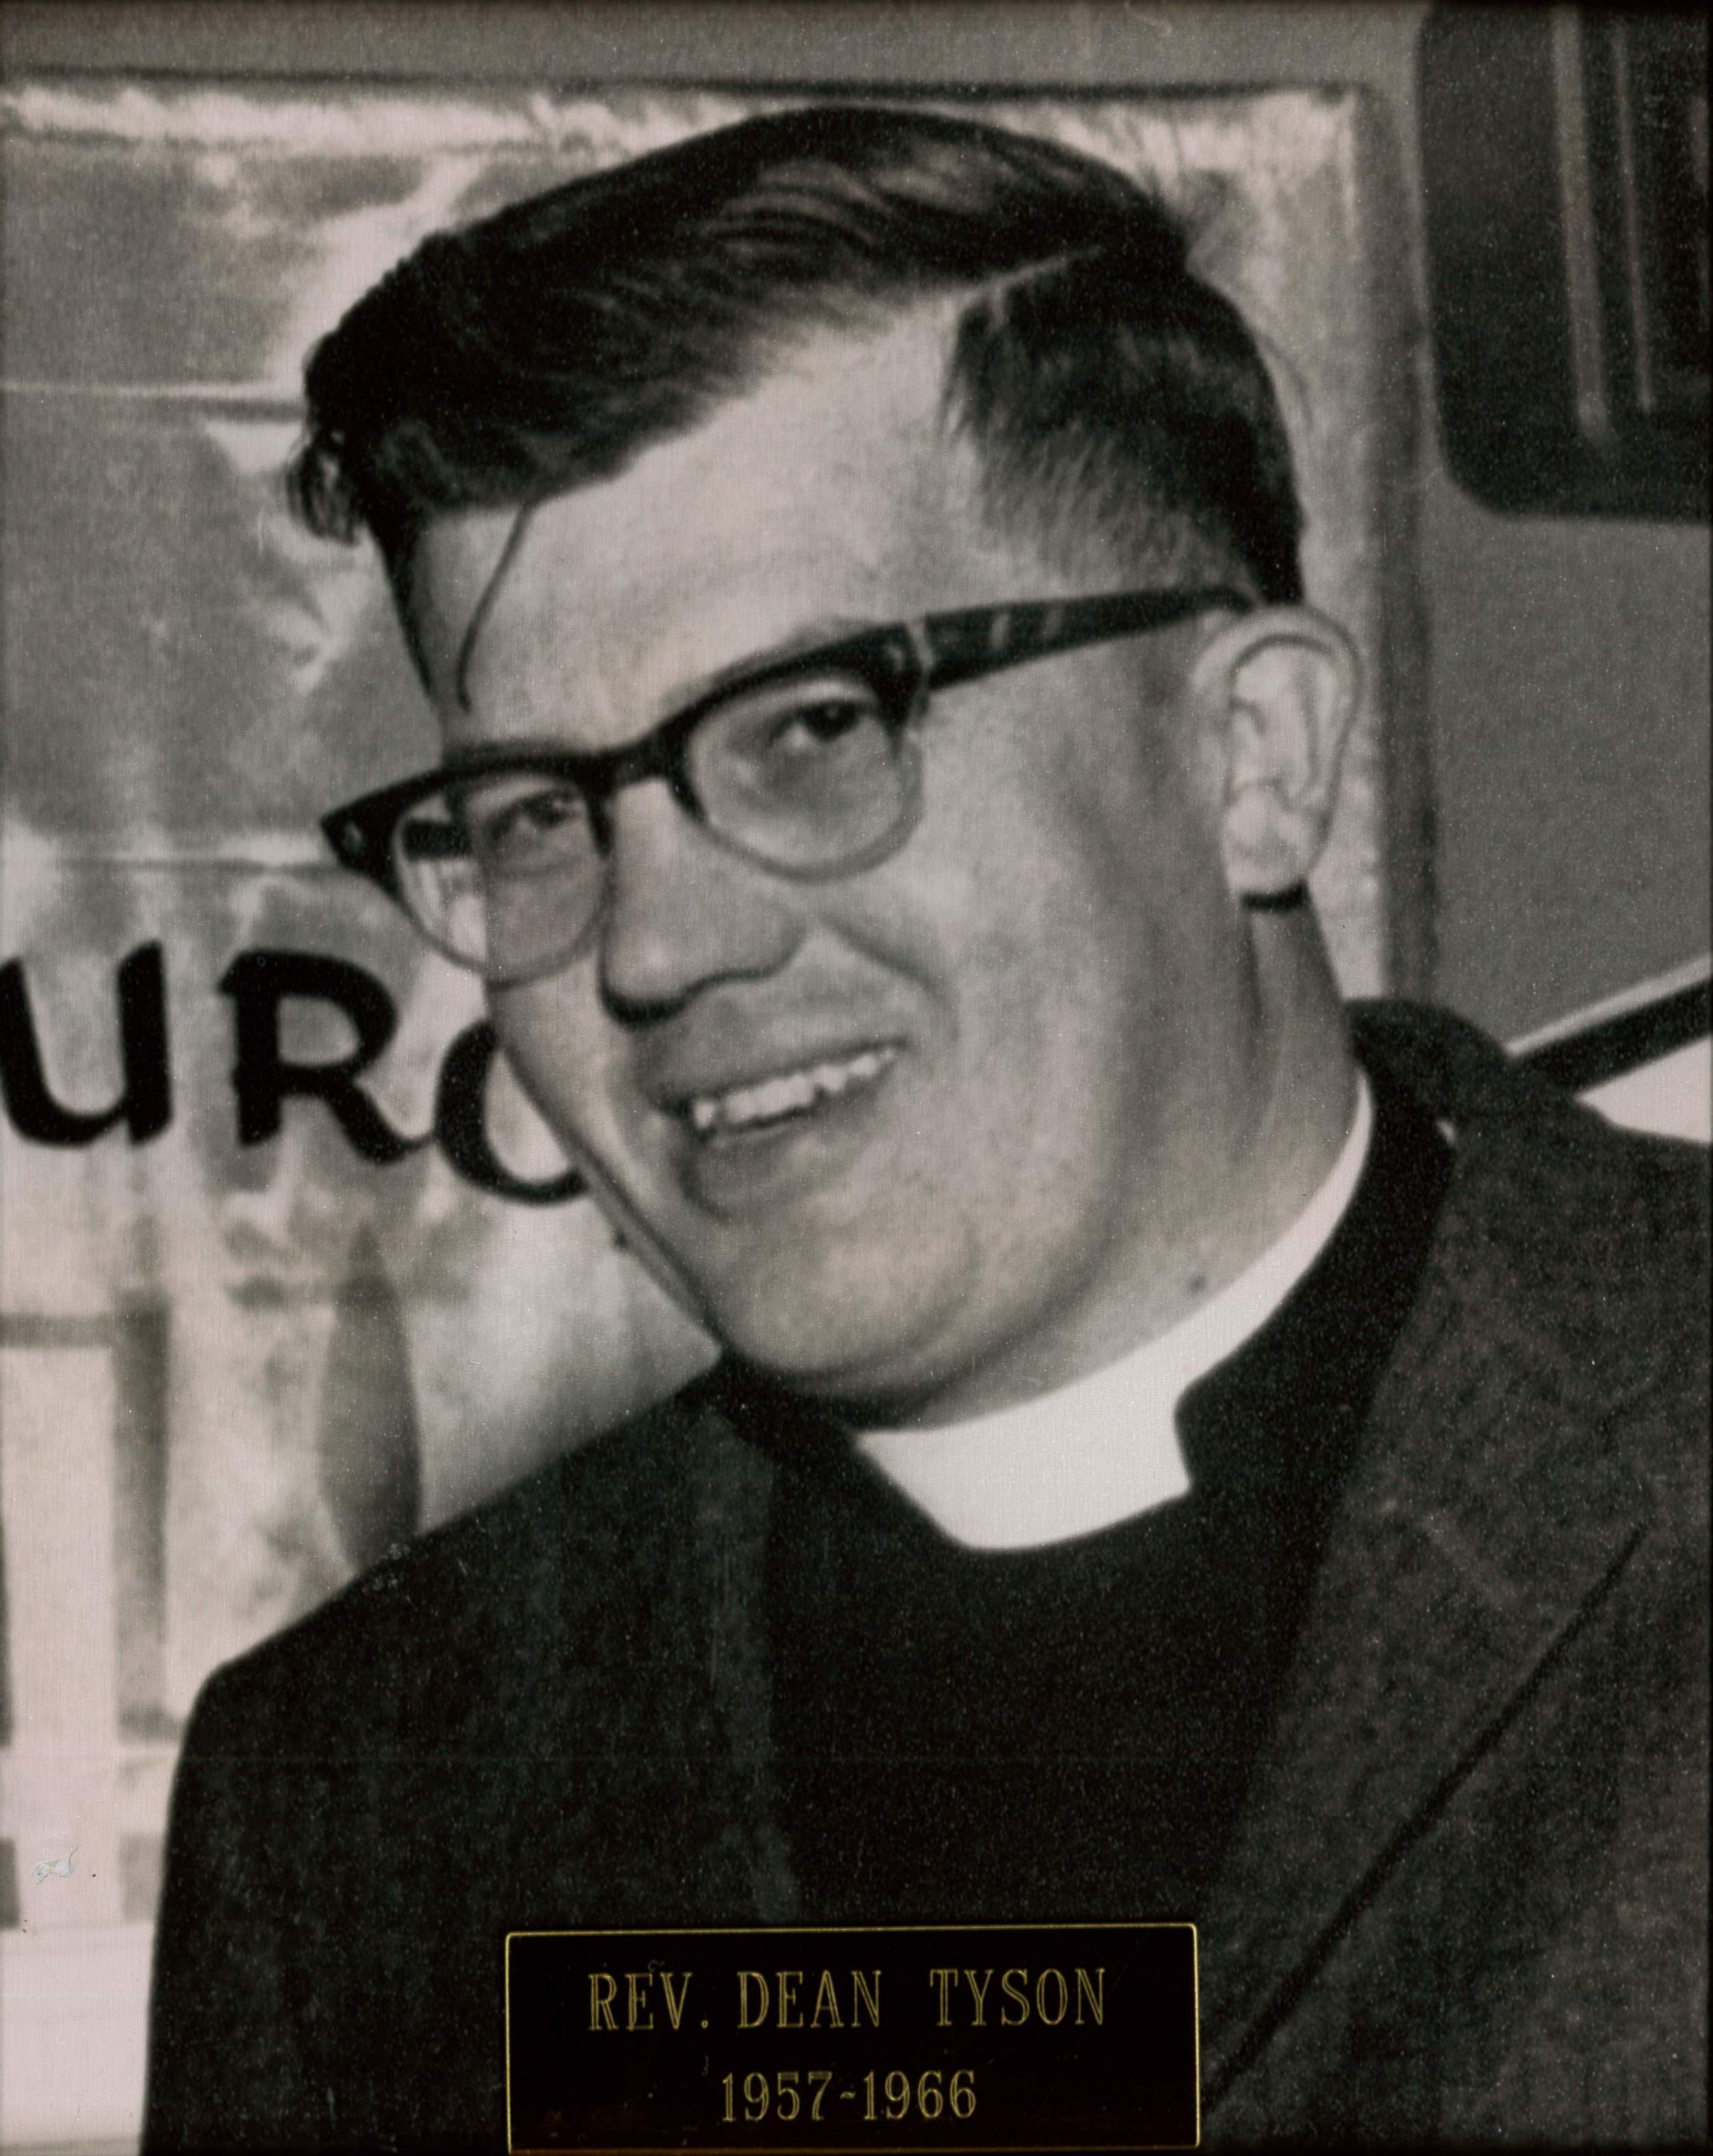 Rev. Dean Tyson